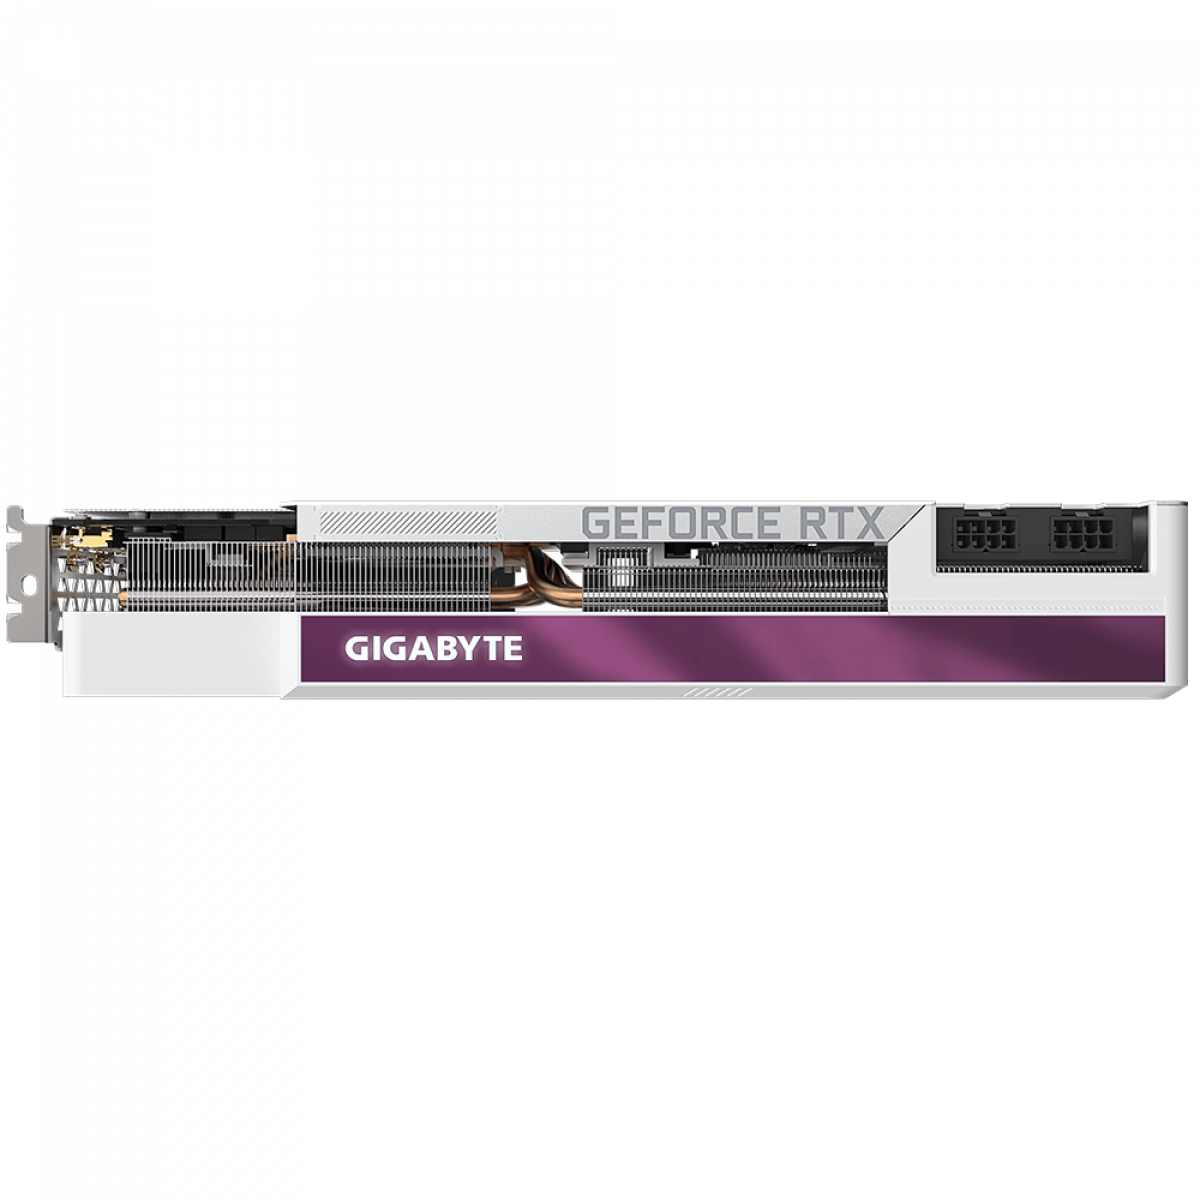 GIGABYTE GeForce RTX 3090 VISION OC 24G